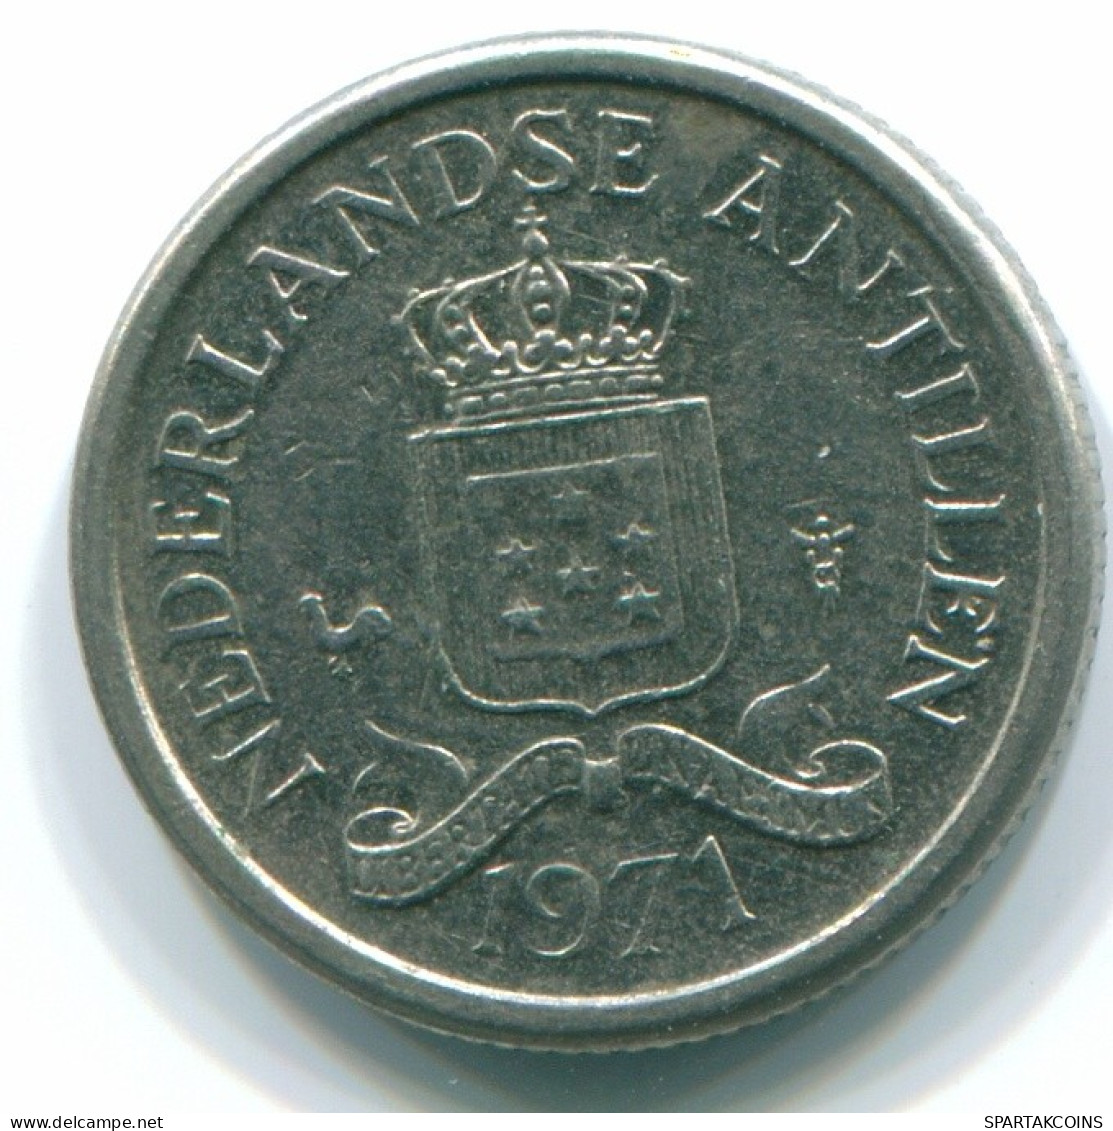 10 CENTS 1971 NETHERLANDS ANTILLES Nickel Colonial Coin #S13488.U.A - Nederlandse Antillen